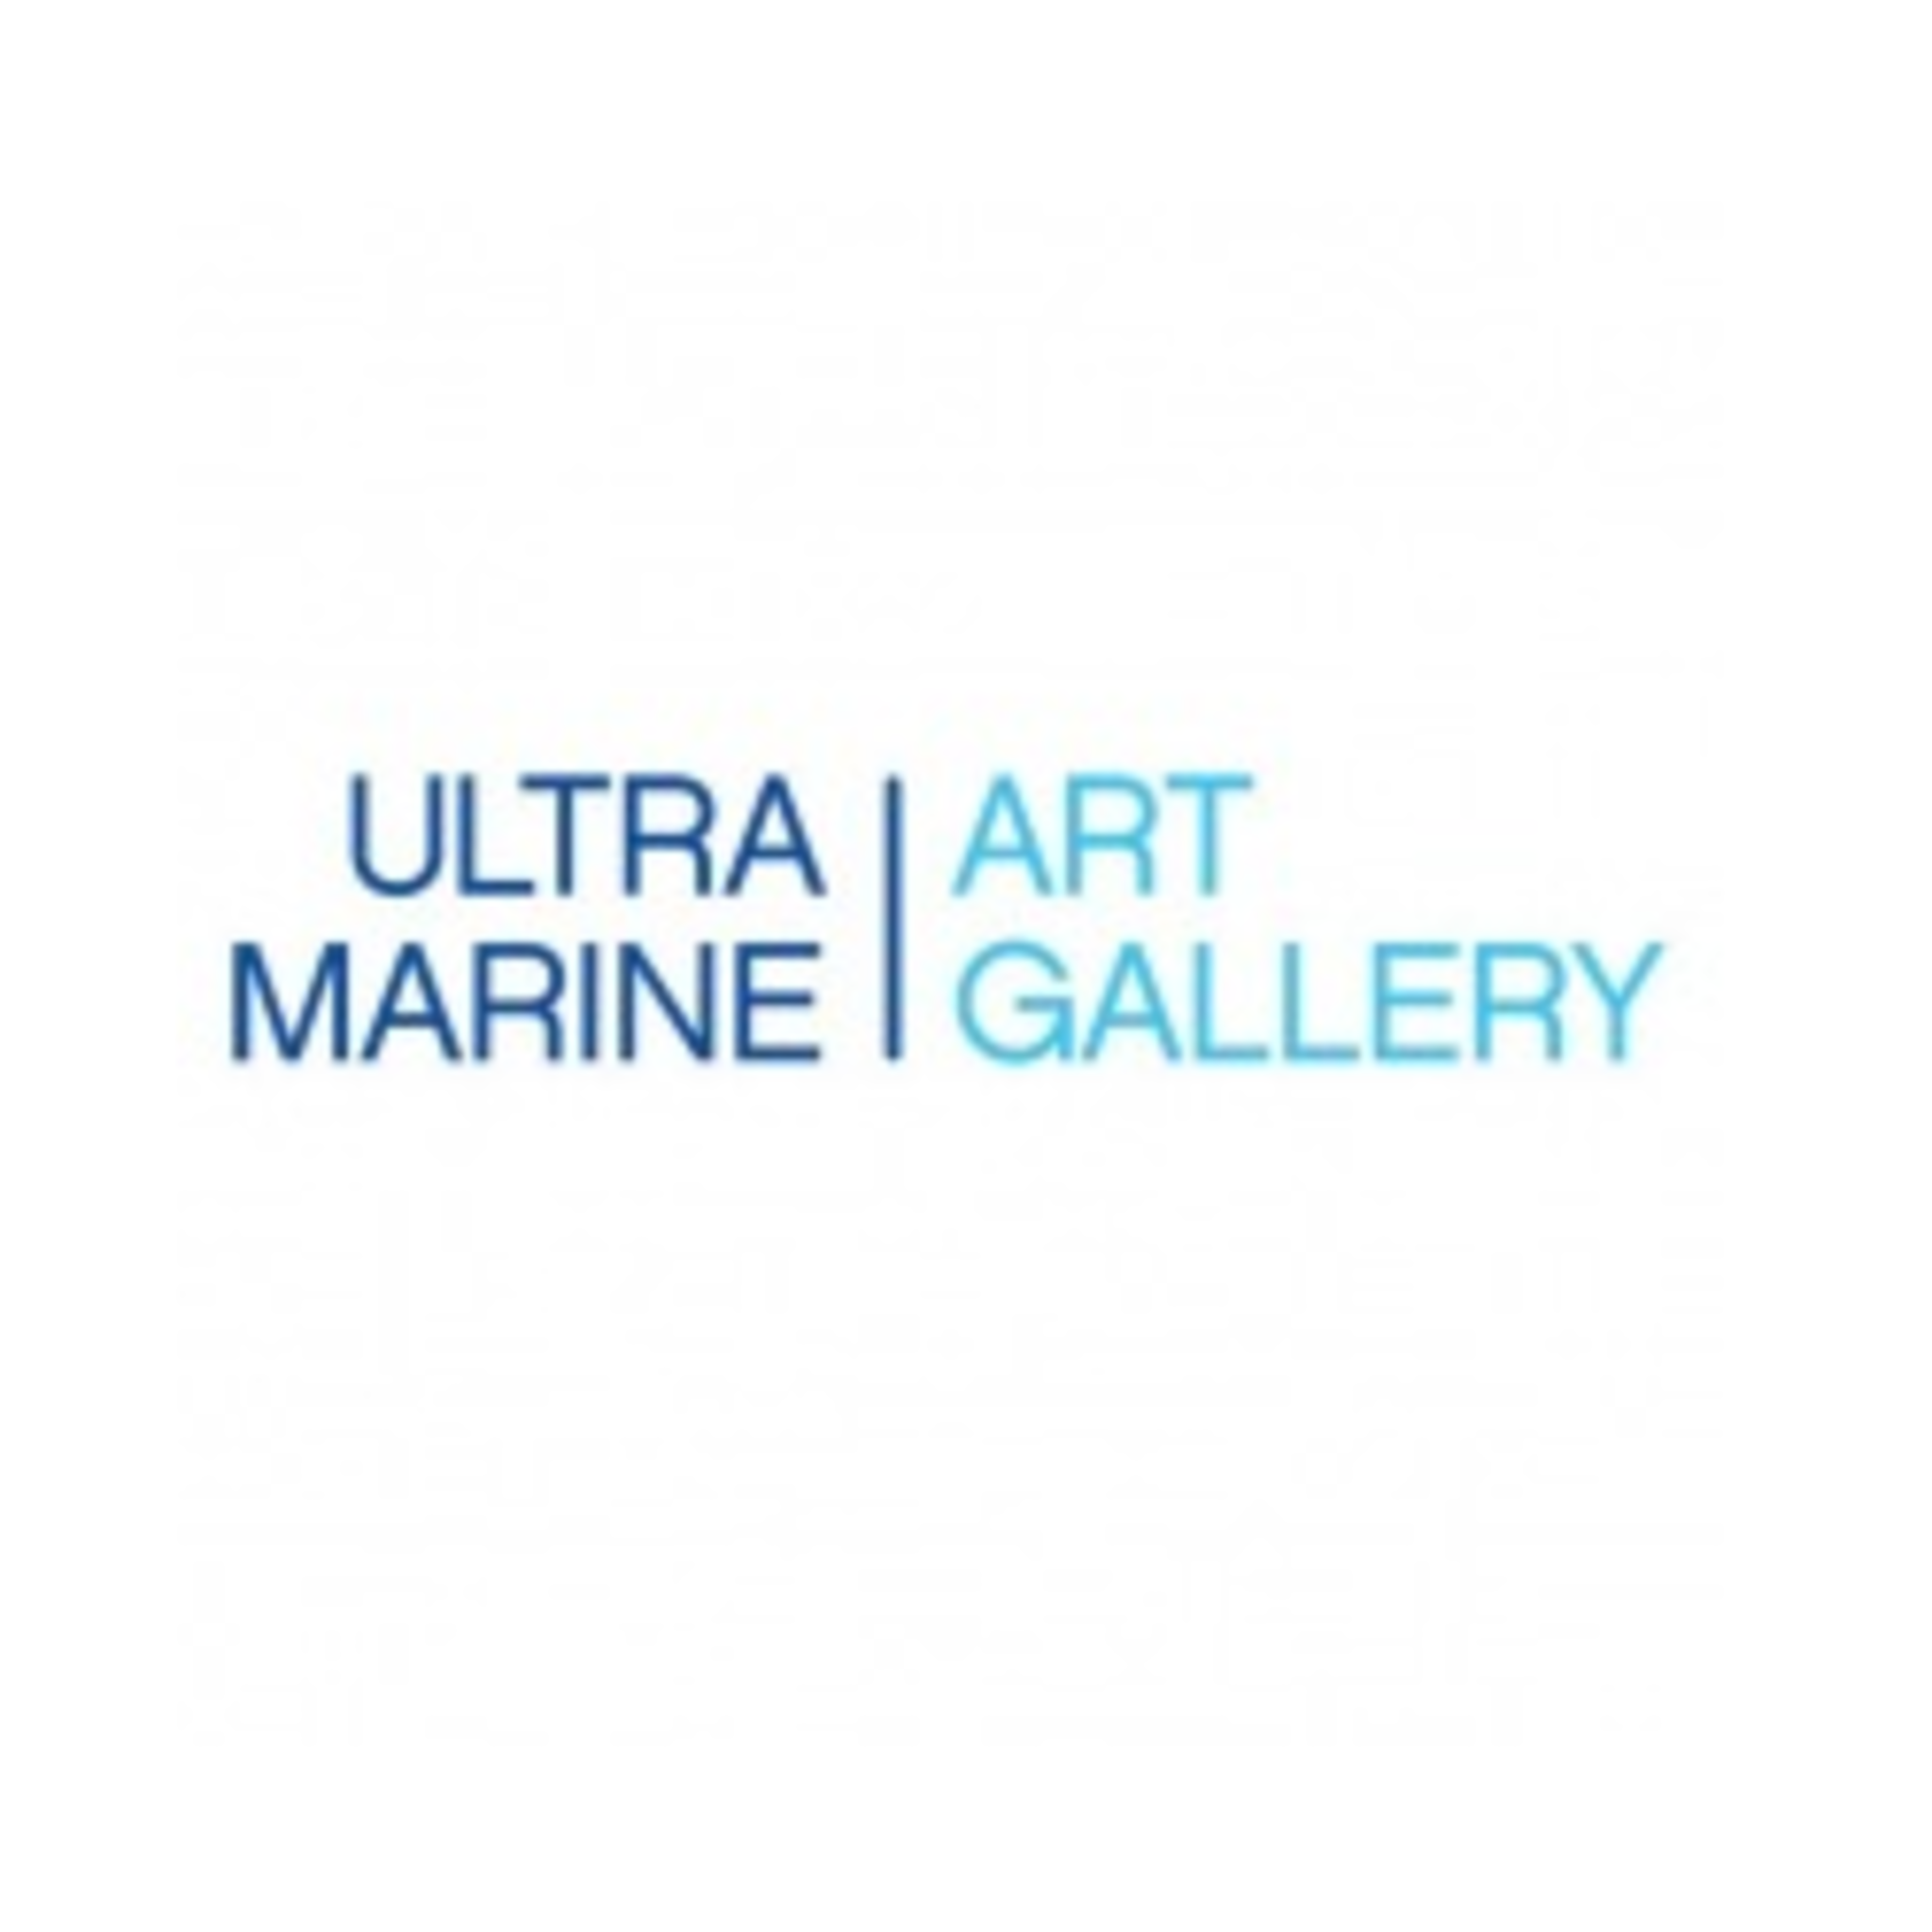 Gallery UltraMarine